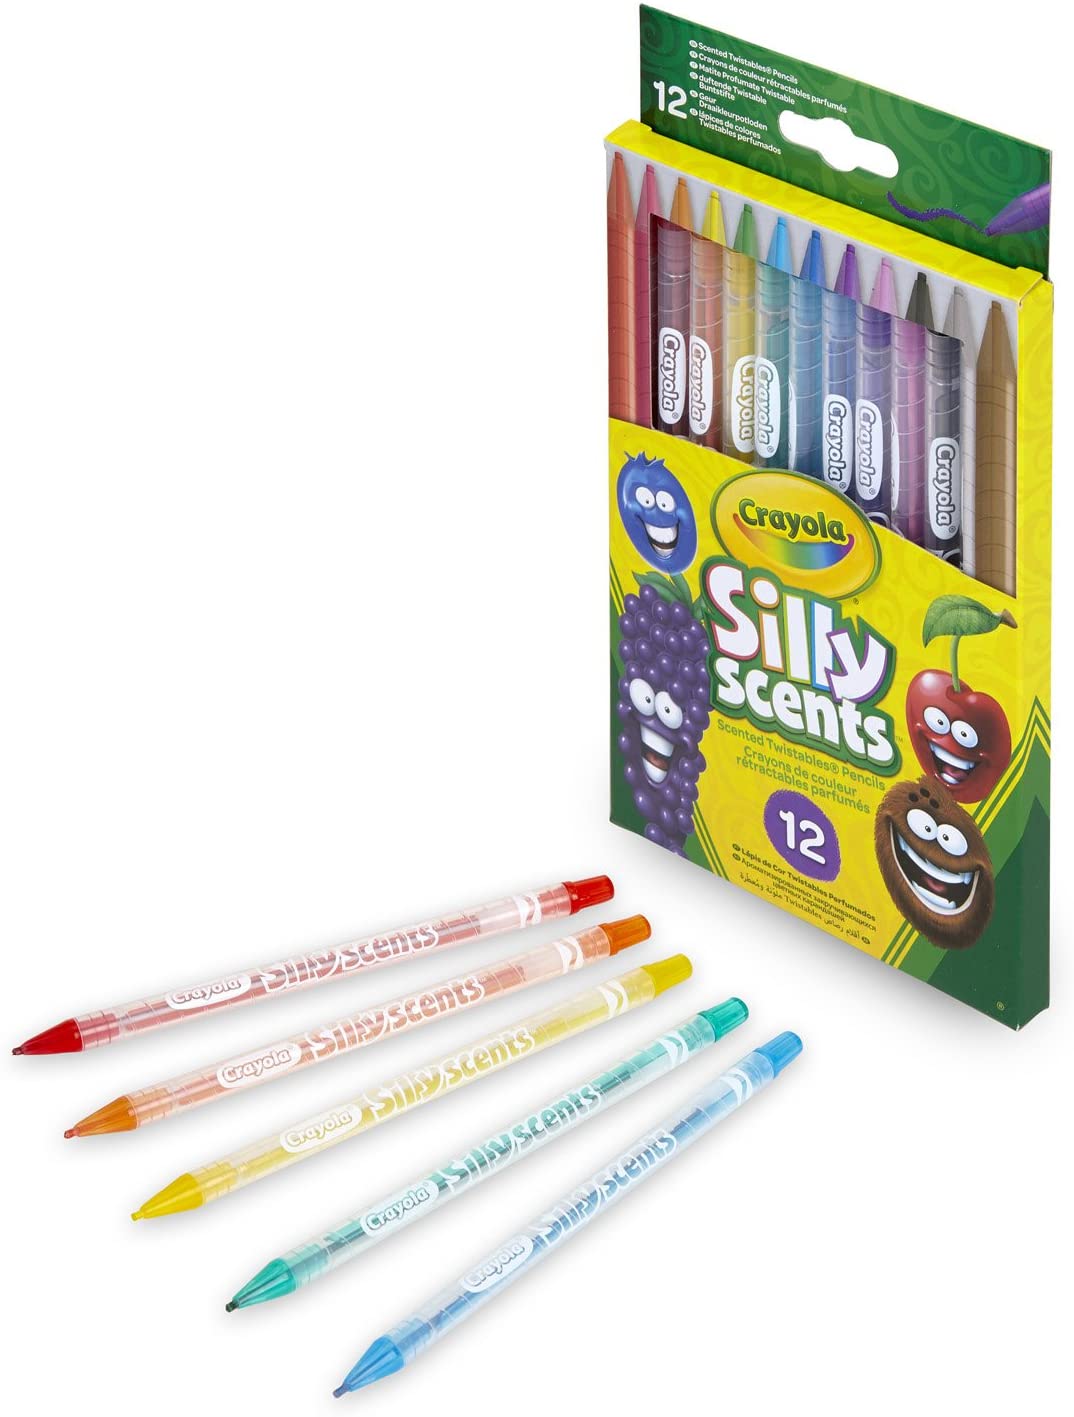 Crayola Silly Scents Twistables Pencils 12